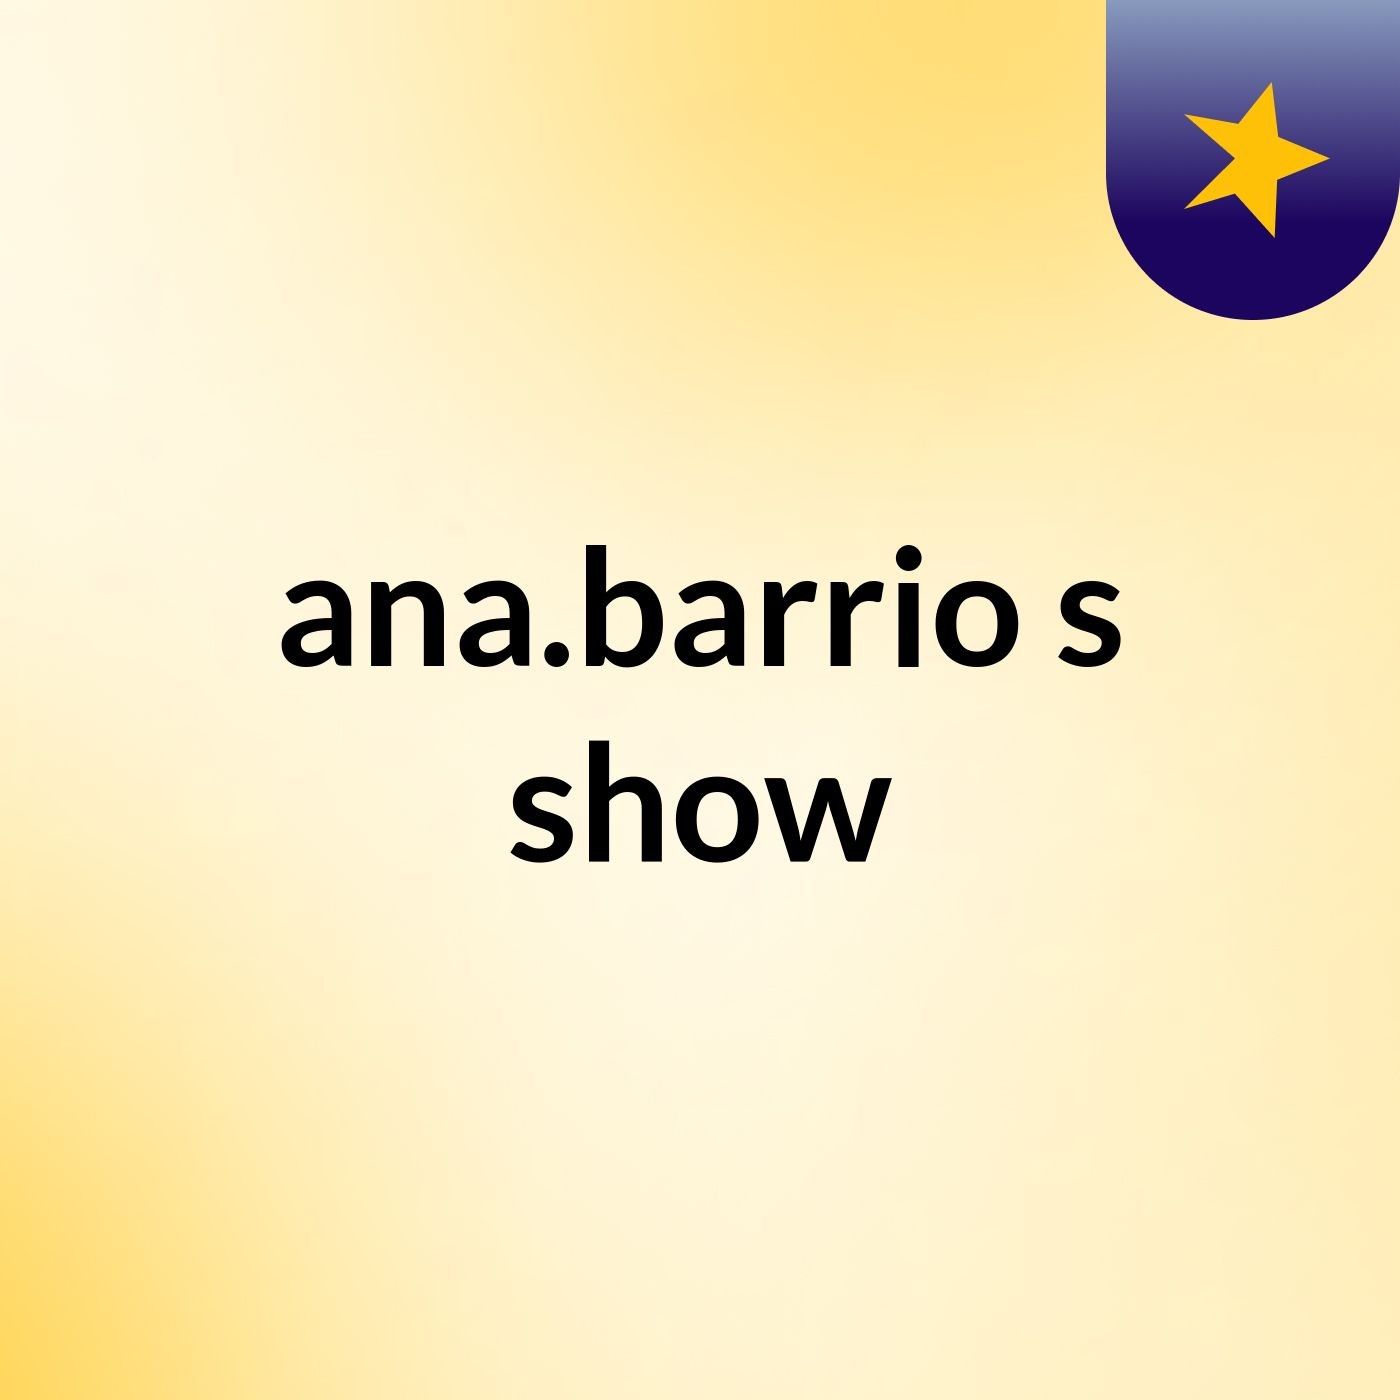 ana.barrio's show